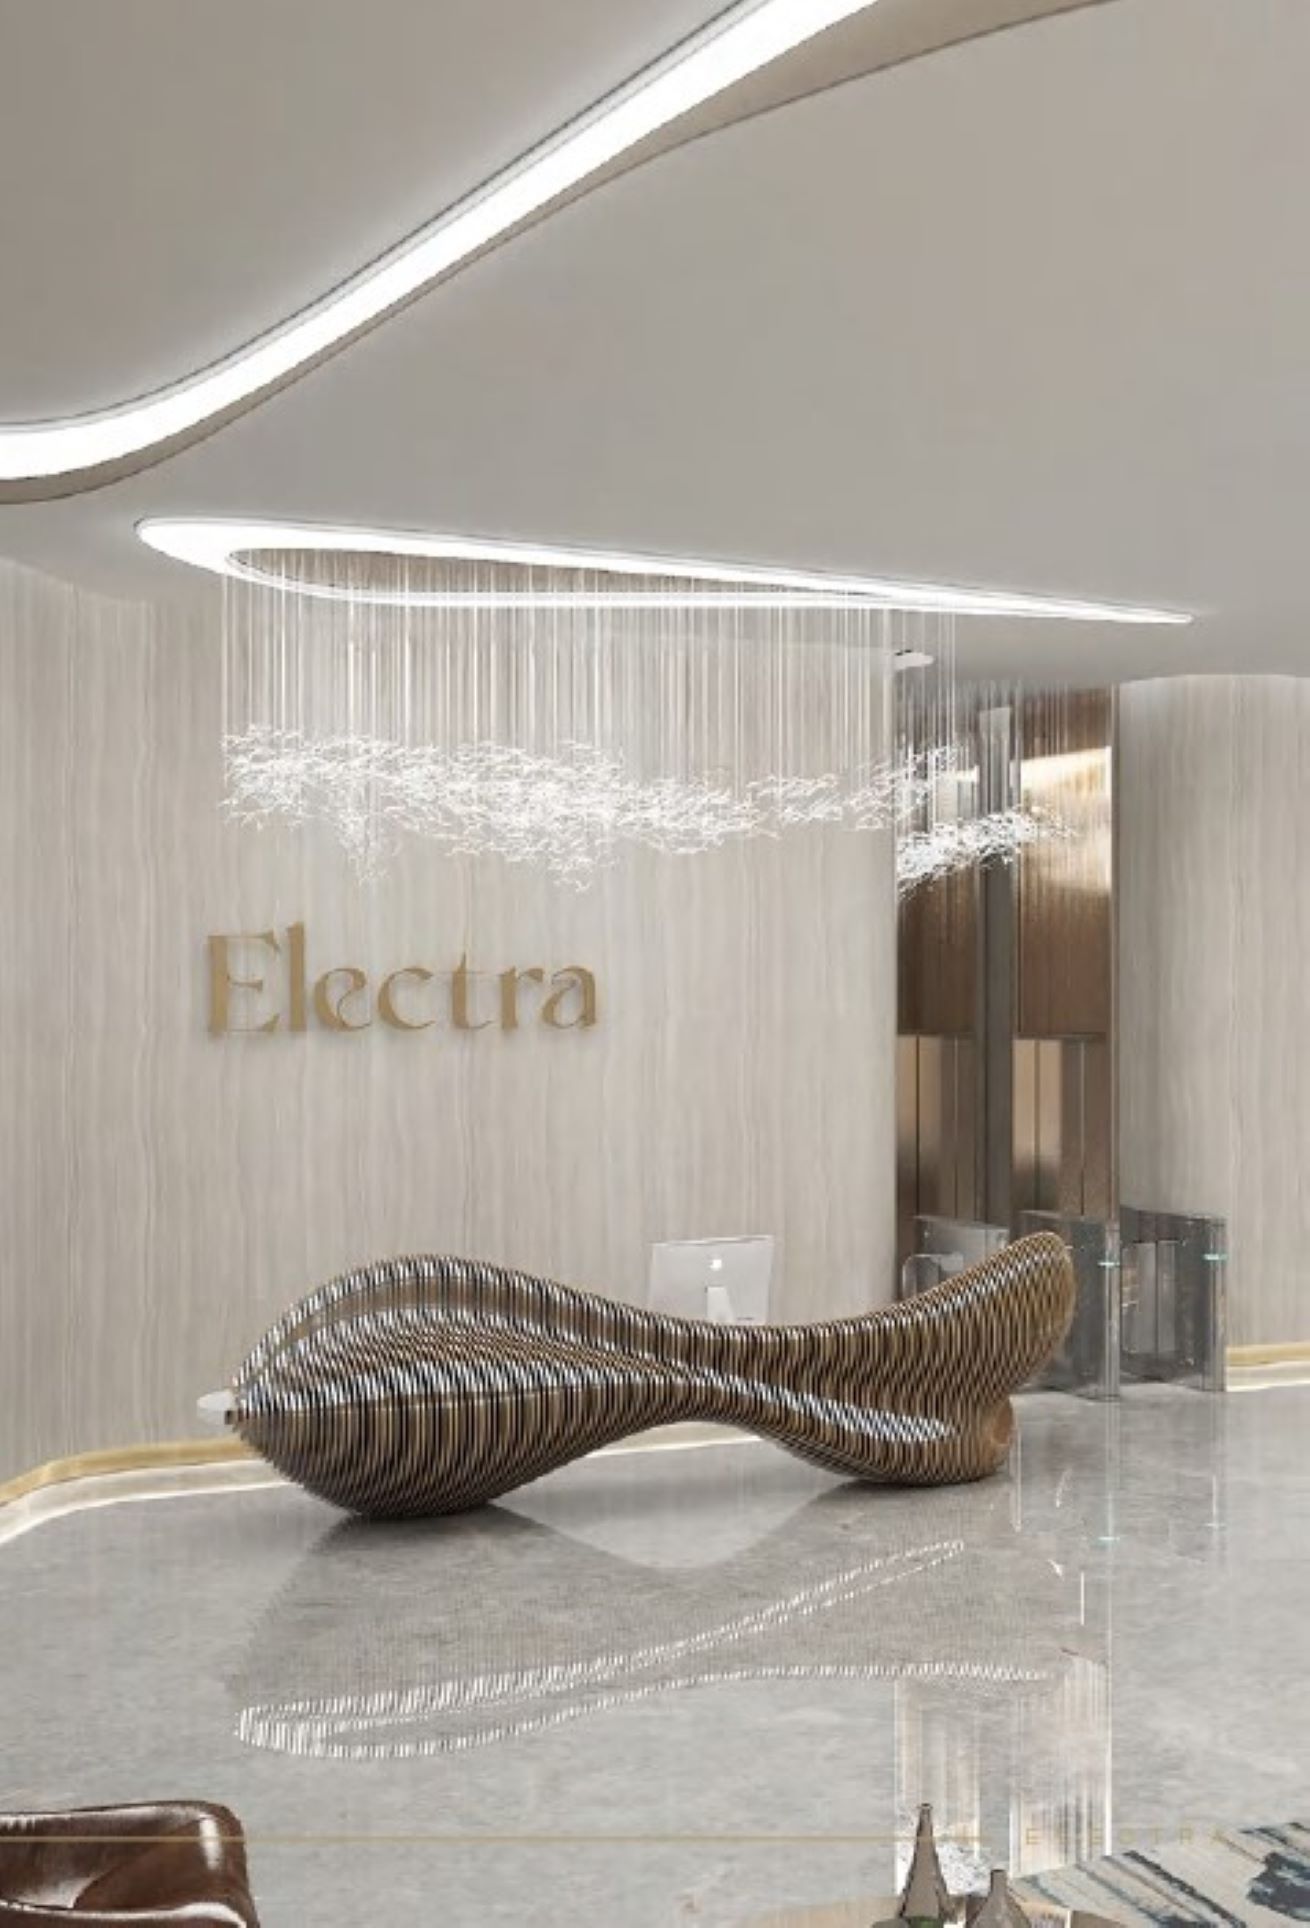 Electra-GOLF COURSE & CRICKET STADIUM - 1 Bedroom